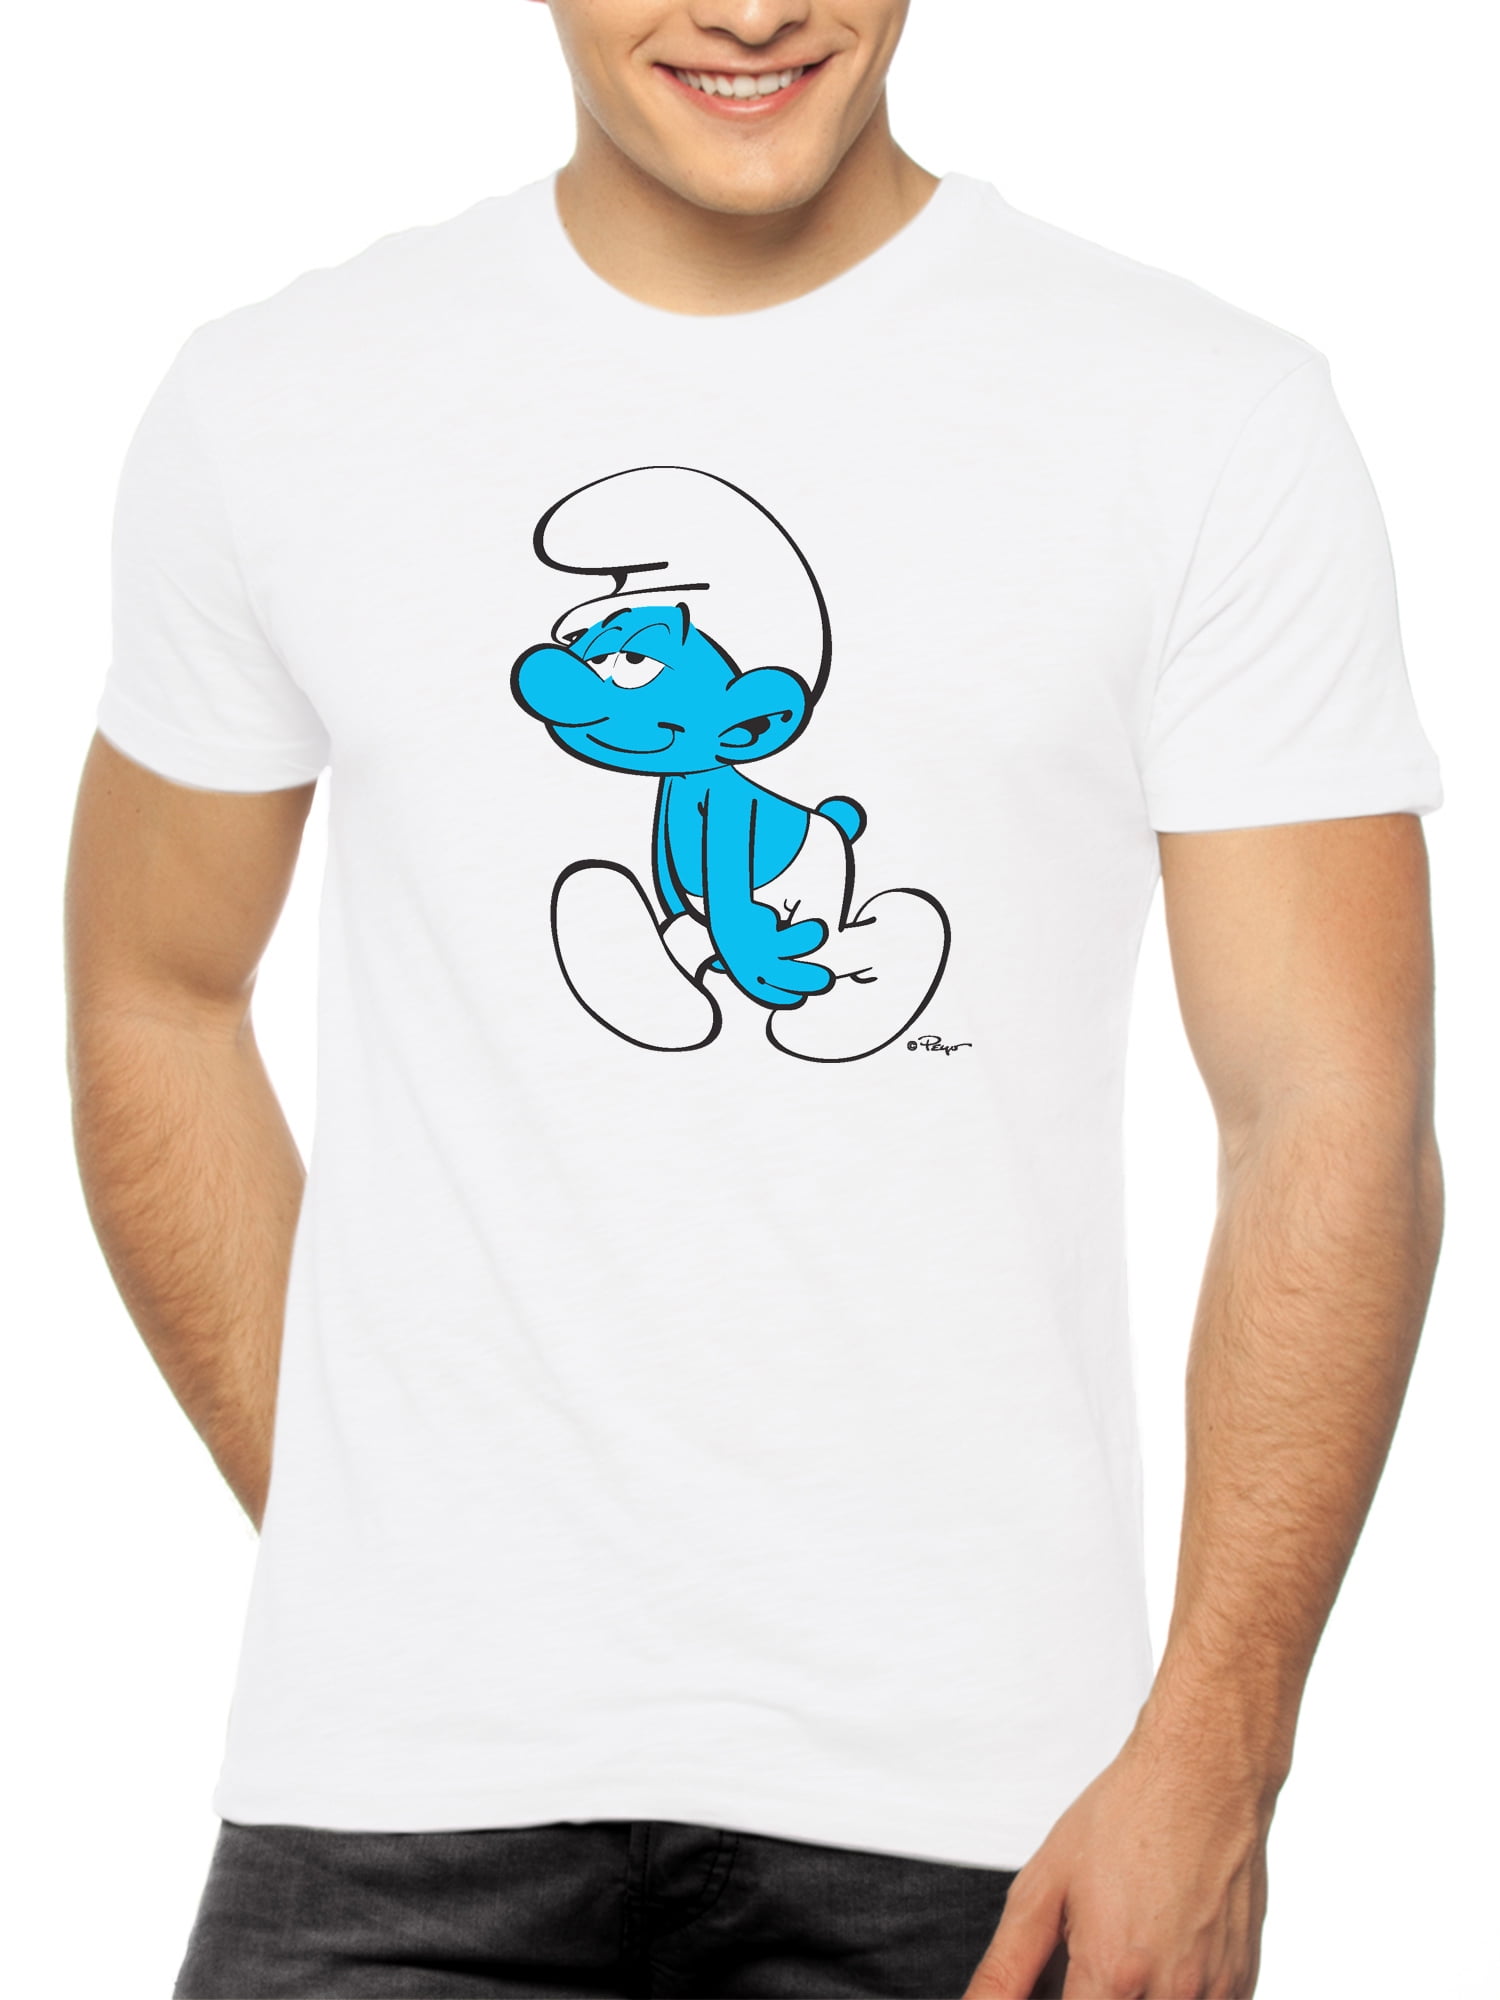 avoid psychology Easygoing Men's "The Smurfs" Short Sleeve Graphic T Shirt - Walmart.com